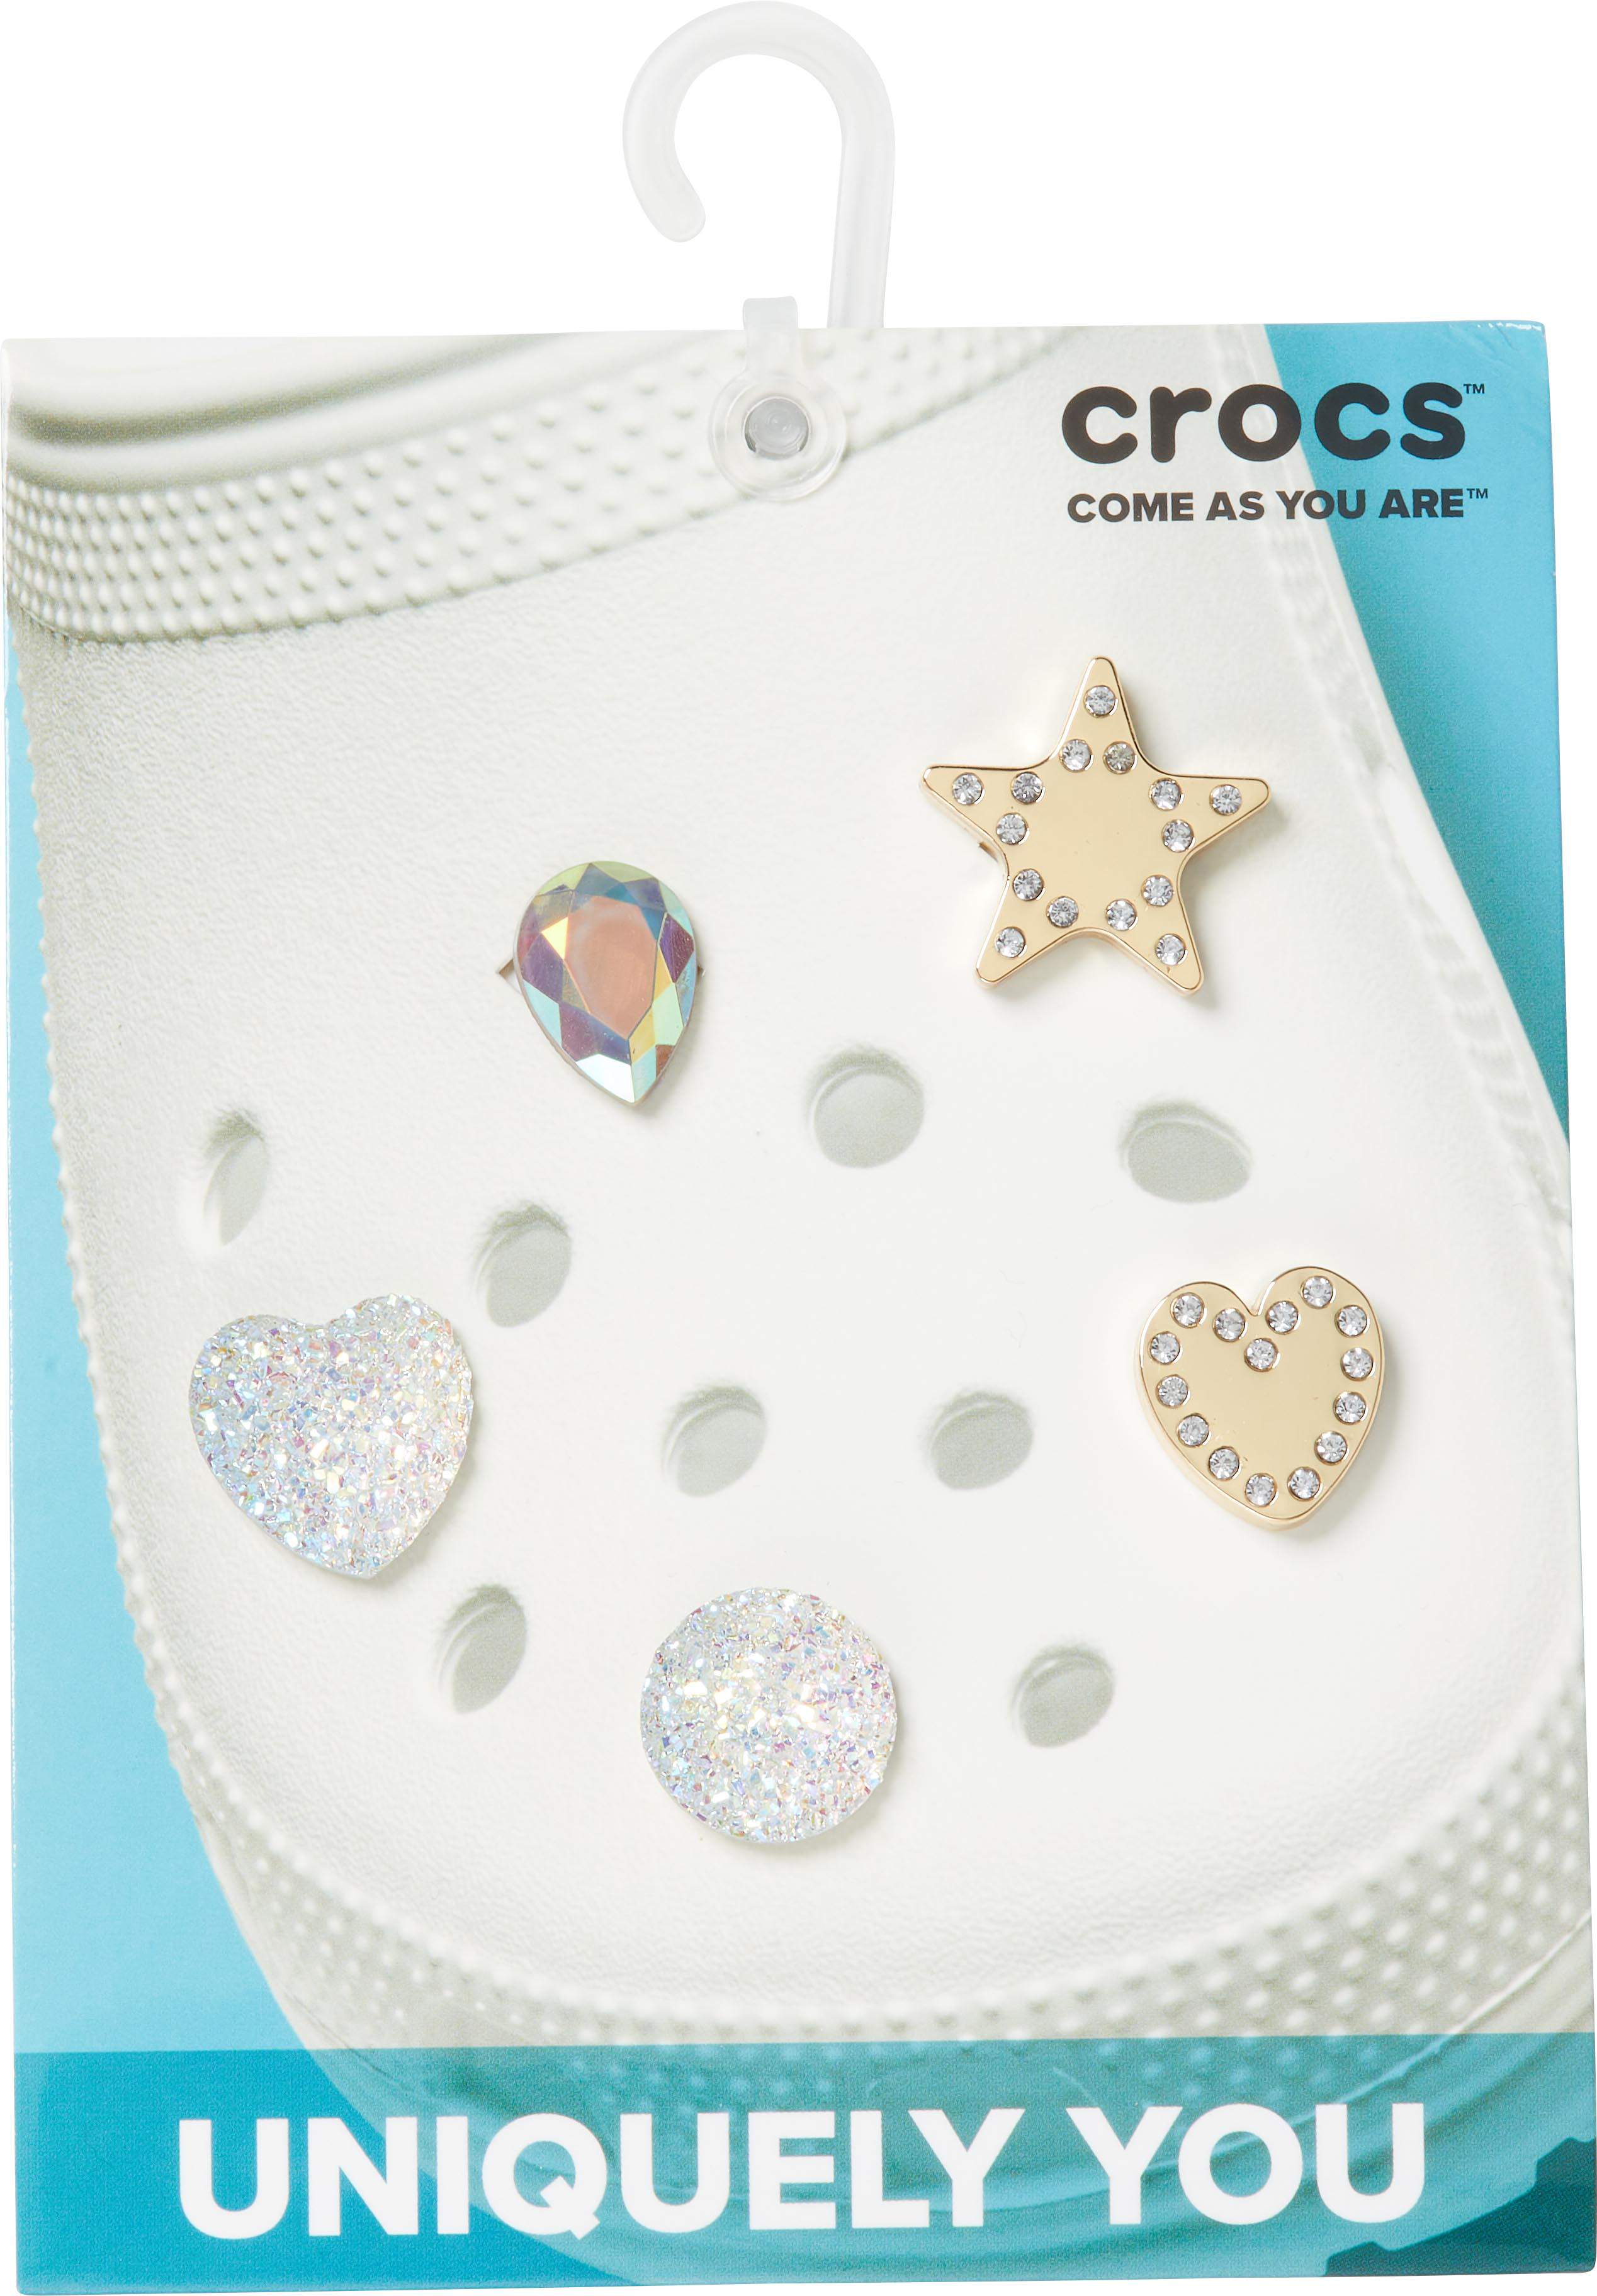 nurse charms for crocs